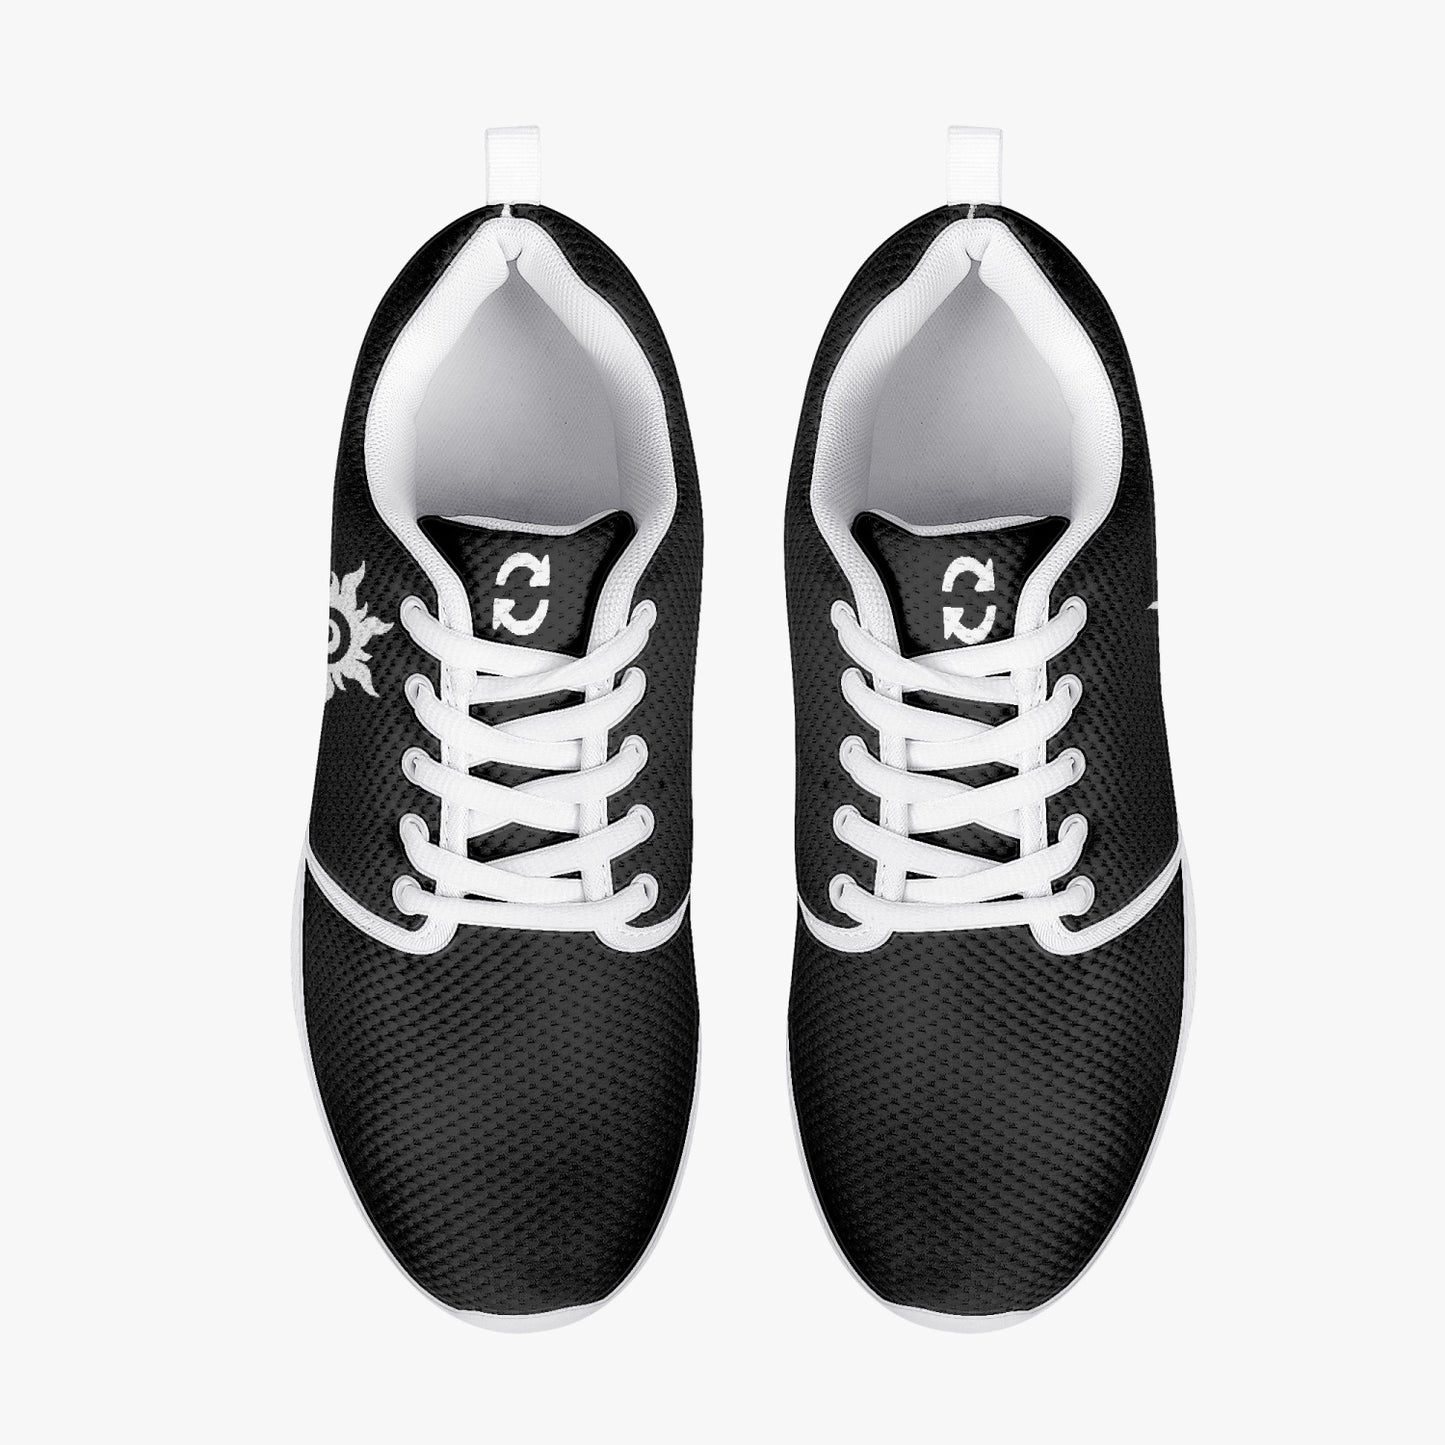 Unisex Stylish Mesh Running Shoes - ActSun White/Black